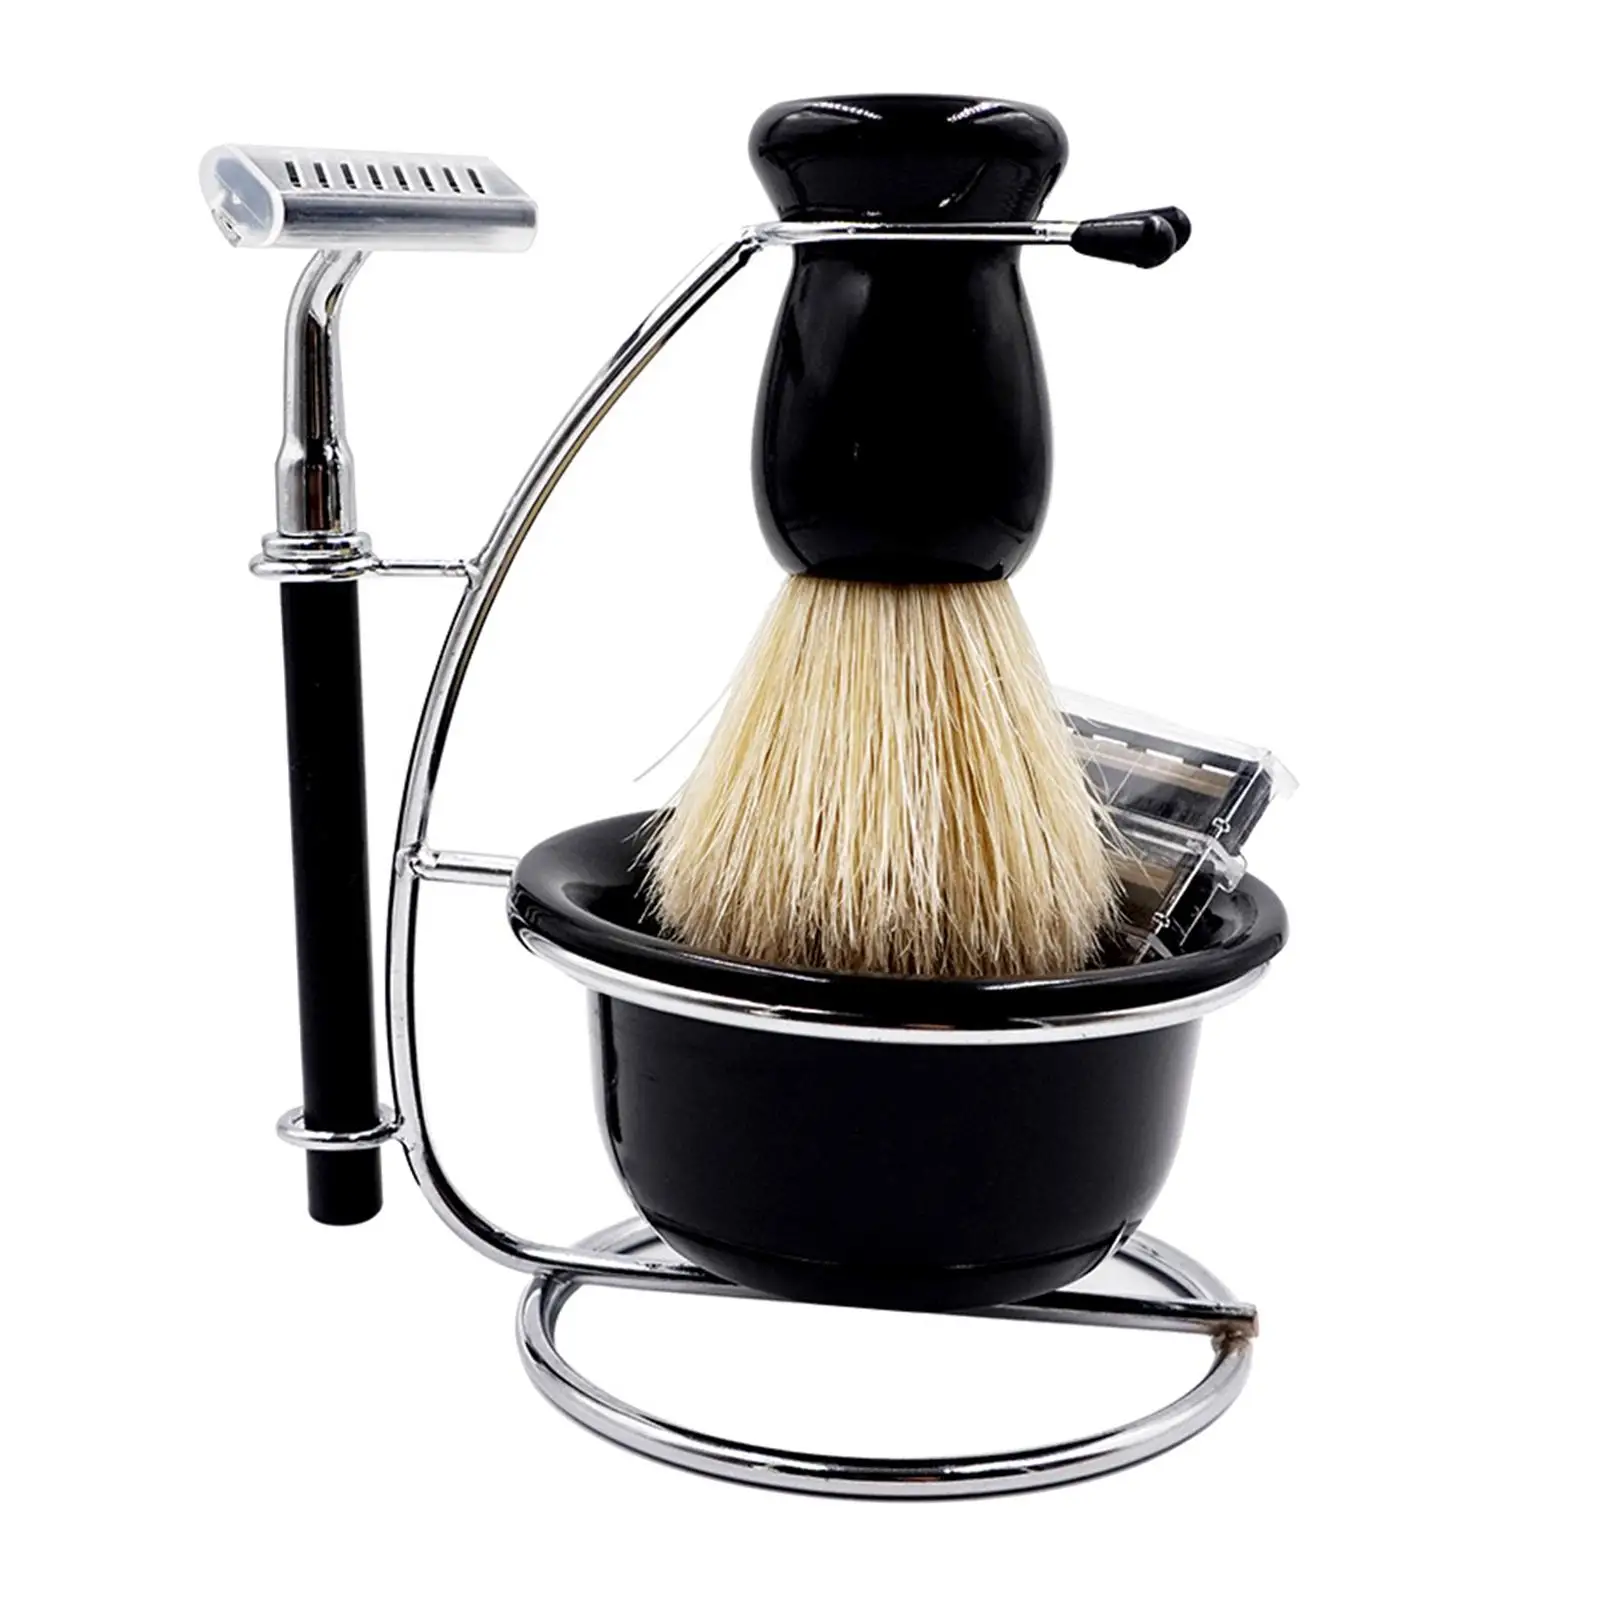 Travel Shaving Kit for Men Manual Stand Brush Bowl Set Accessories Portable